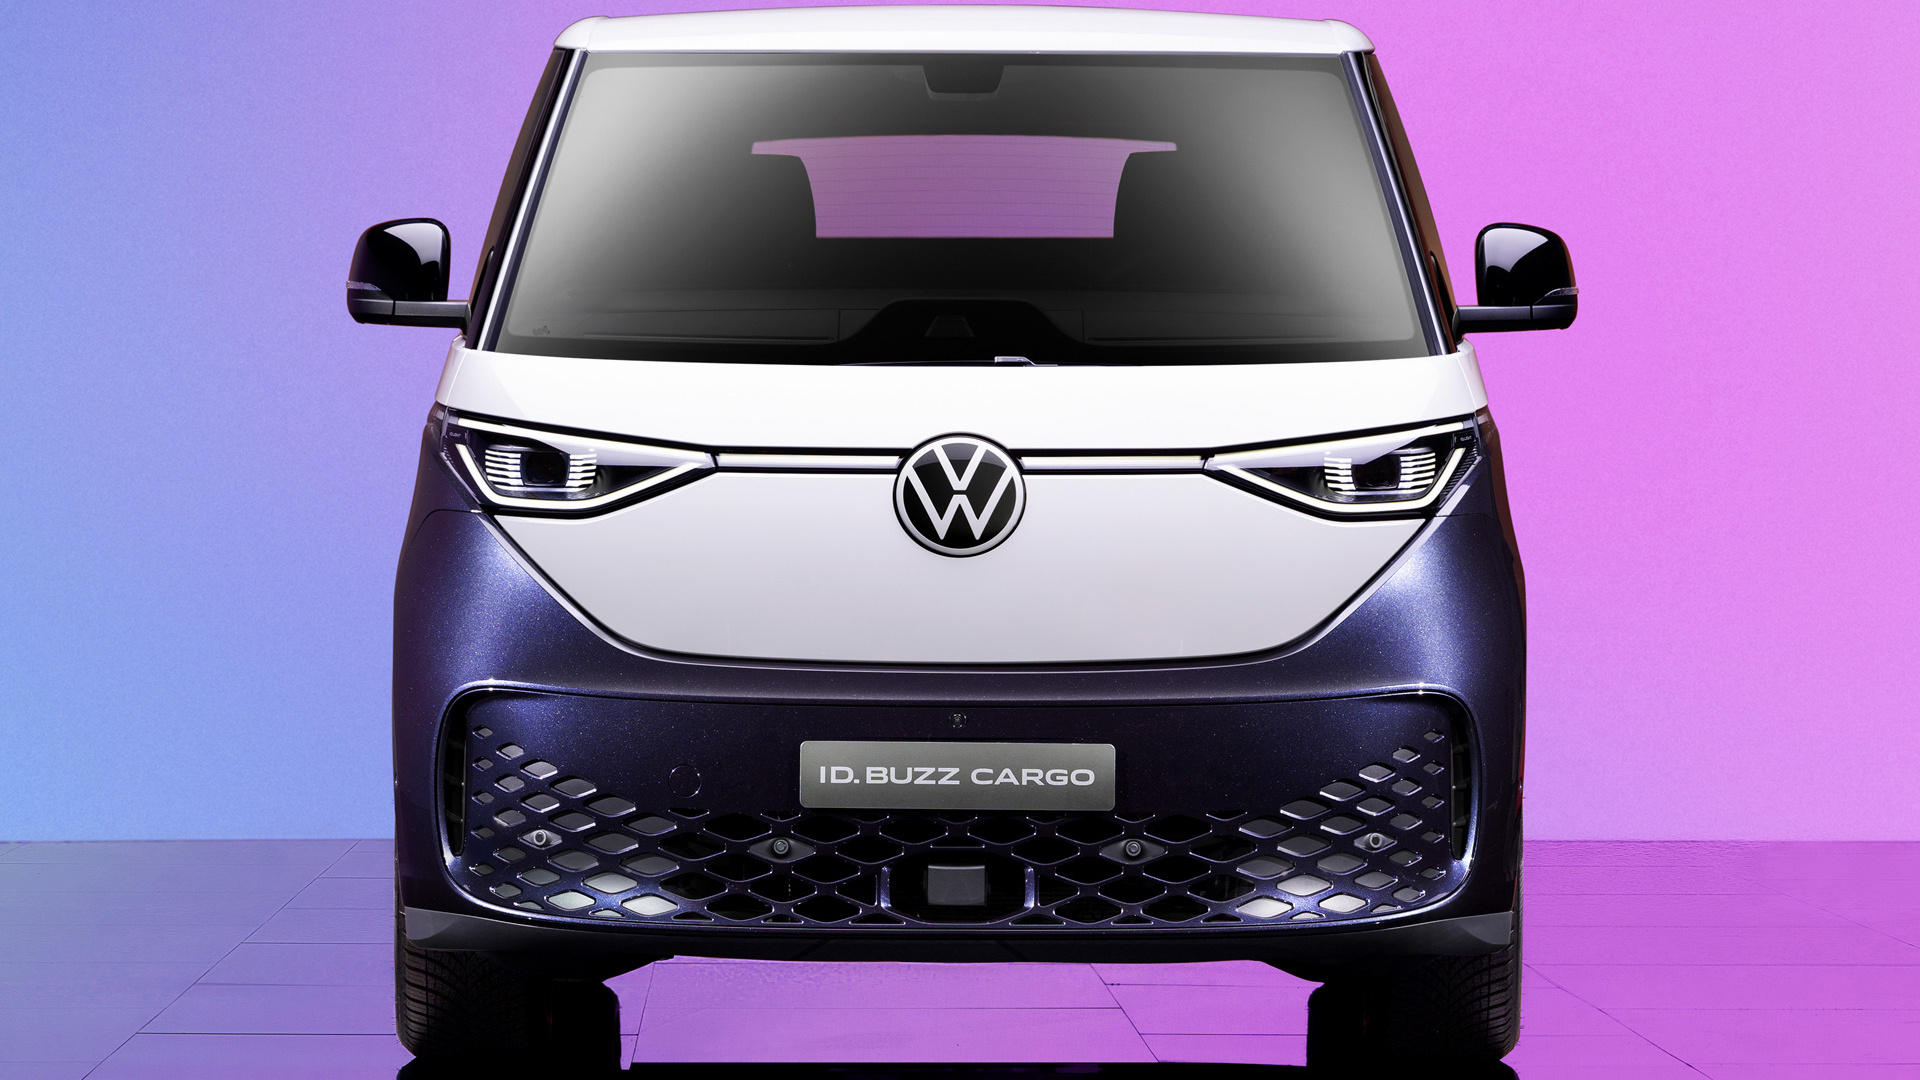 2022 Volkswagen Id Buzz Cargo Wallpapers And Hd Images Car Pixel